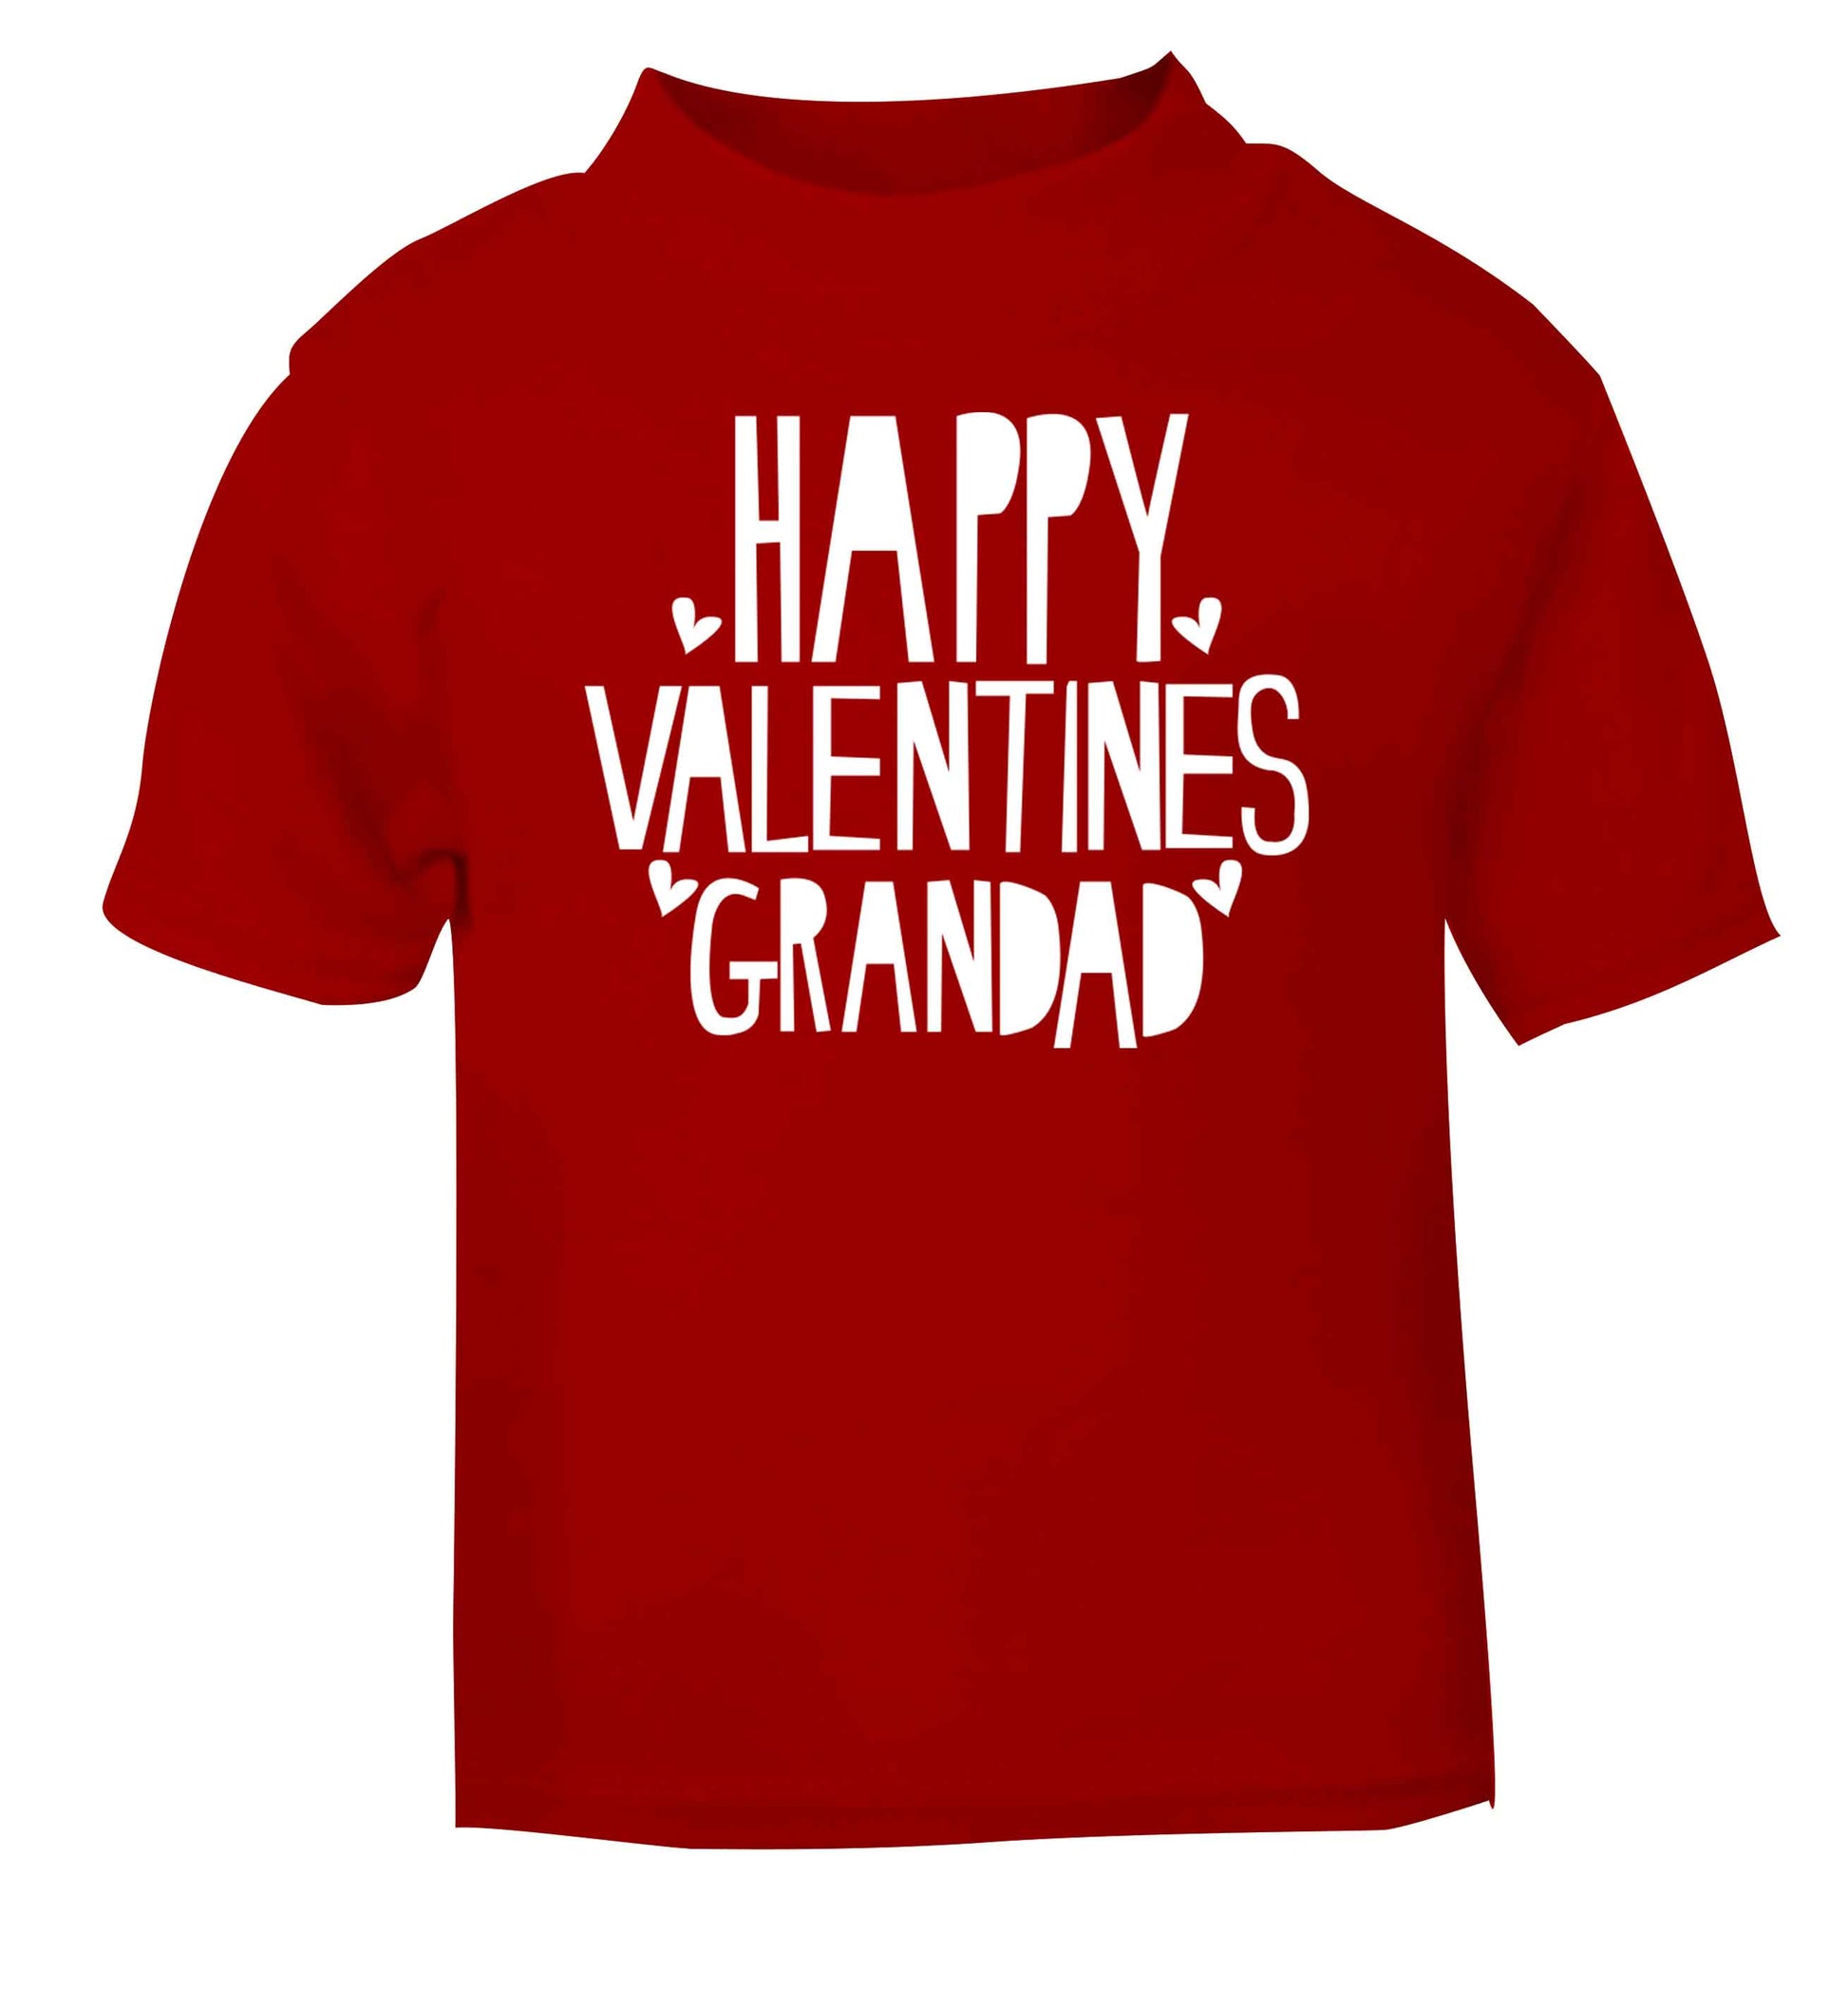 Happy valentines grandad red baby toddler Tshirt 2 Years